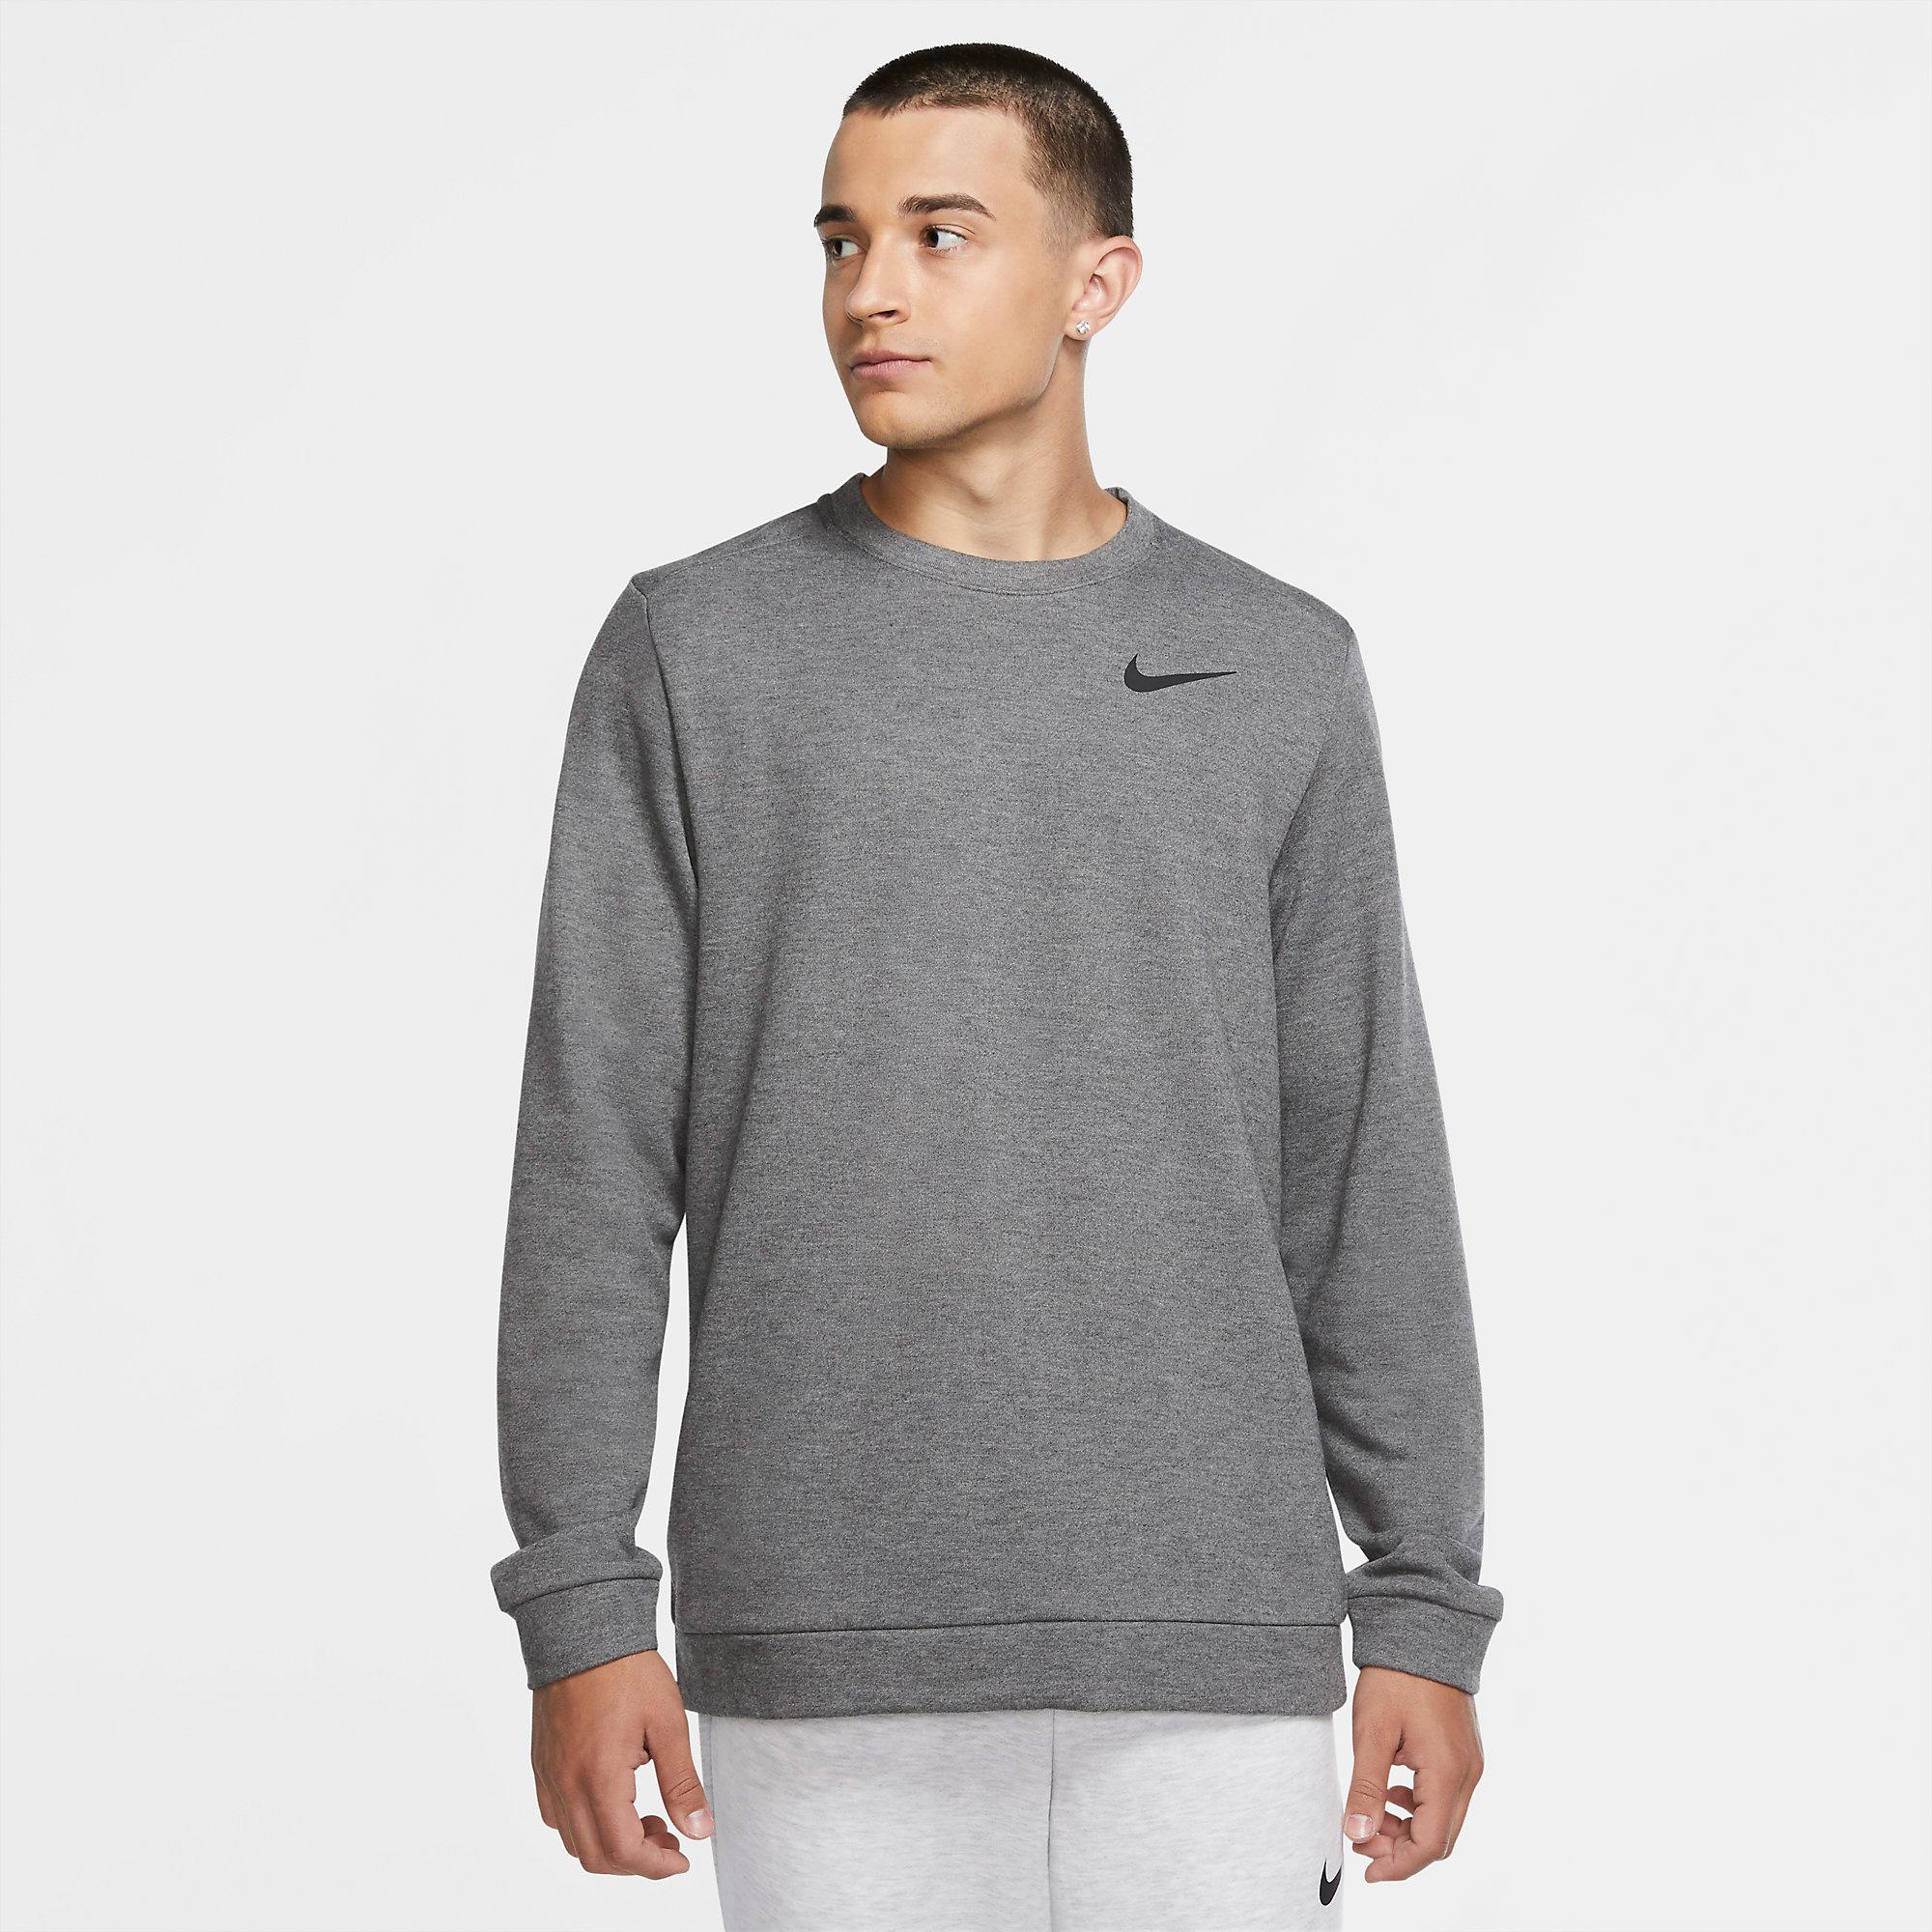 Nike Mens Dri-FIT Long Sleeve - Charcoal Grey - Tennisnuts.com